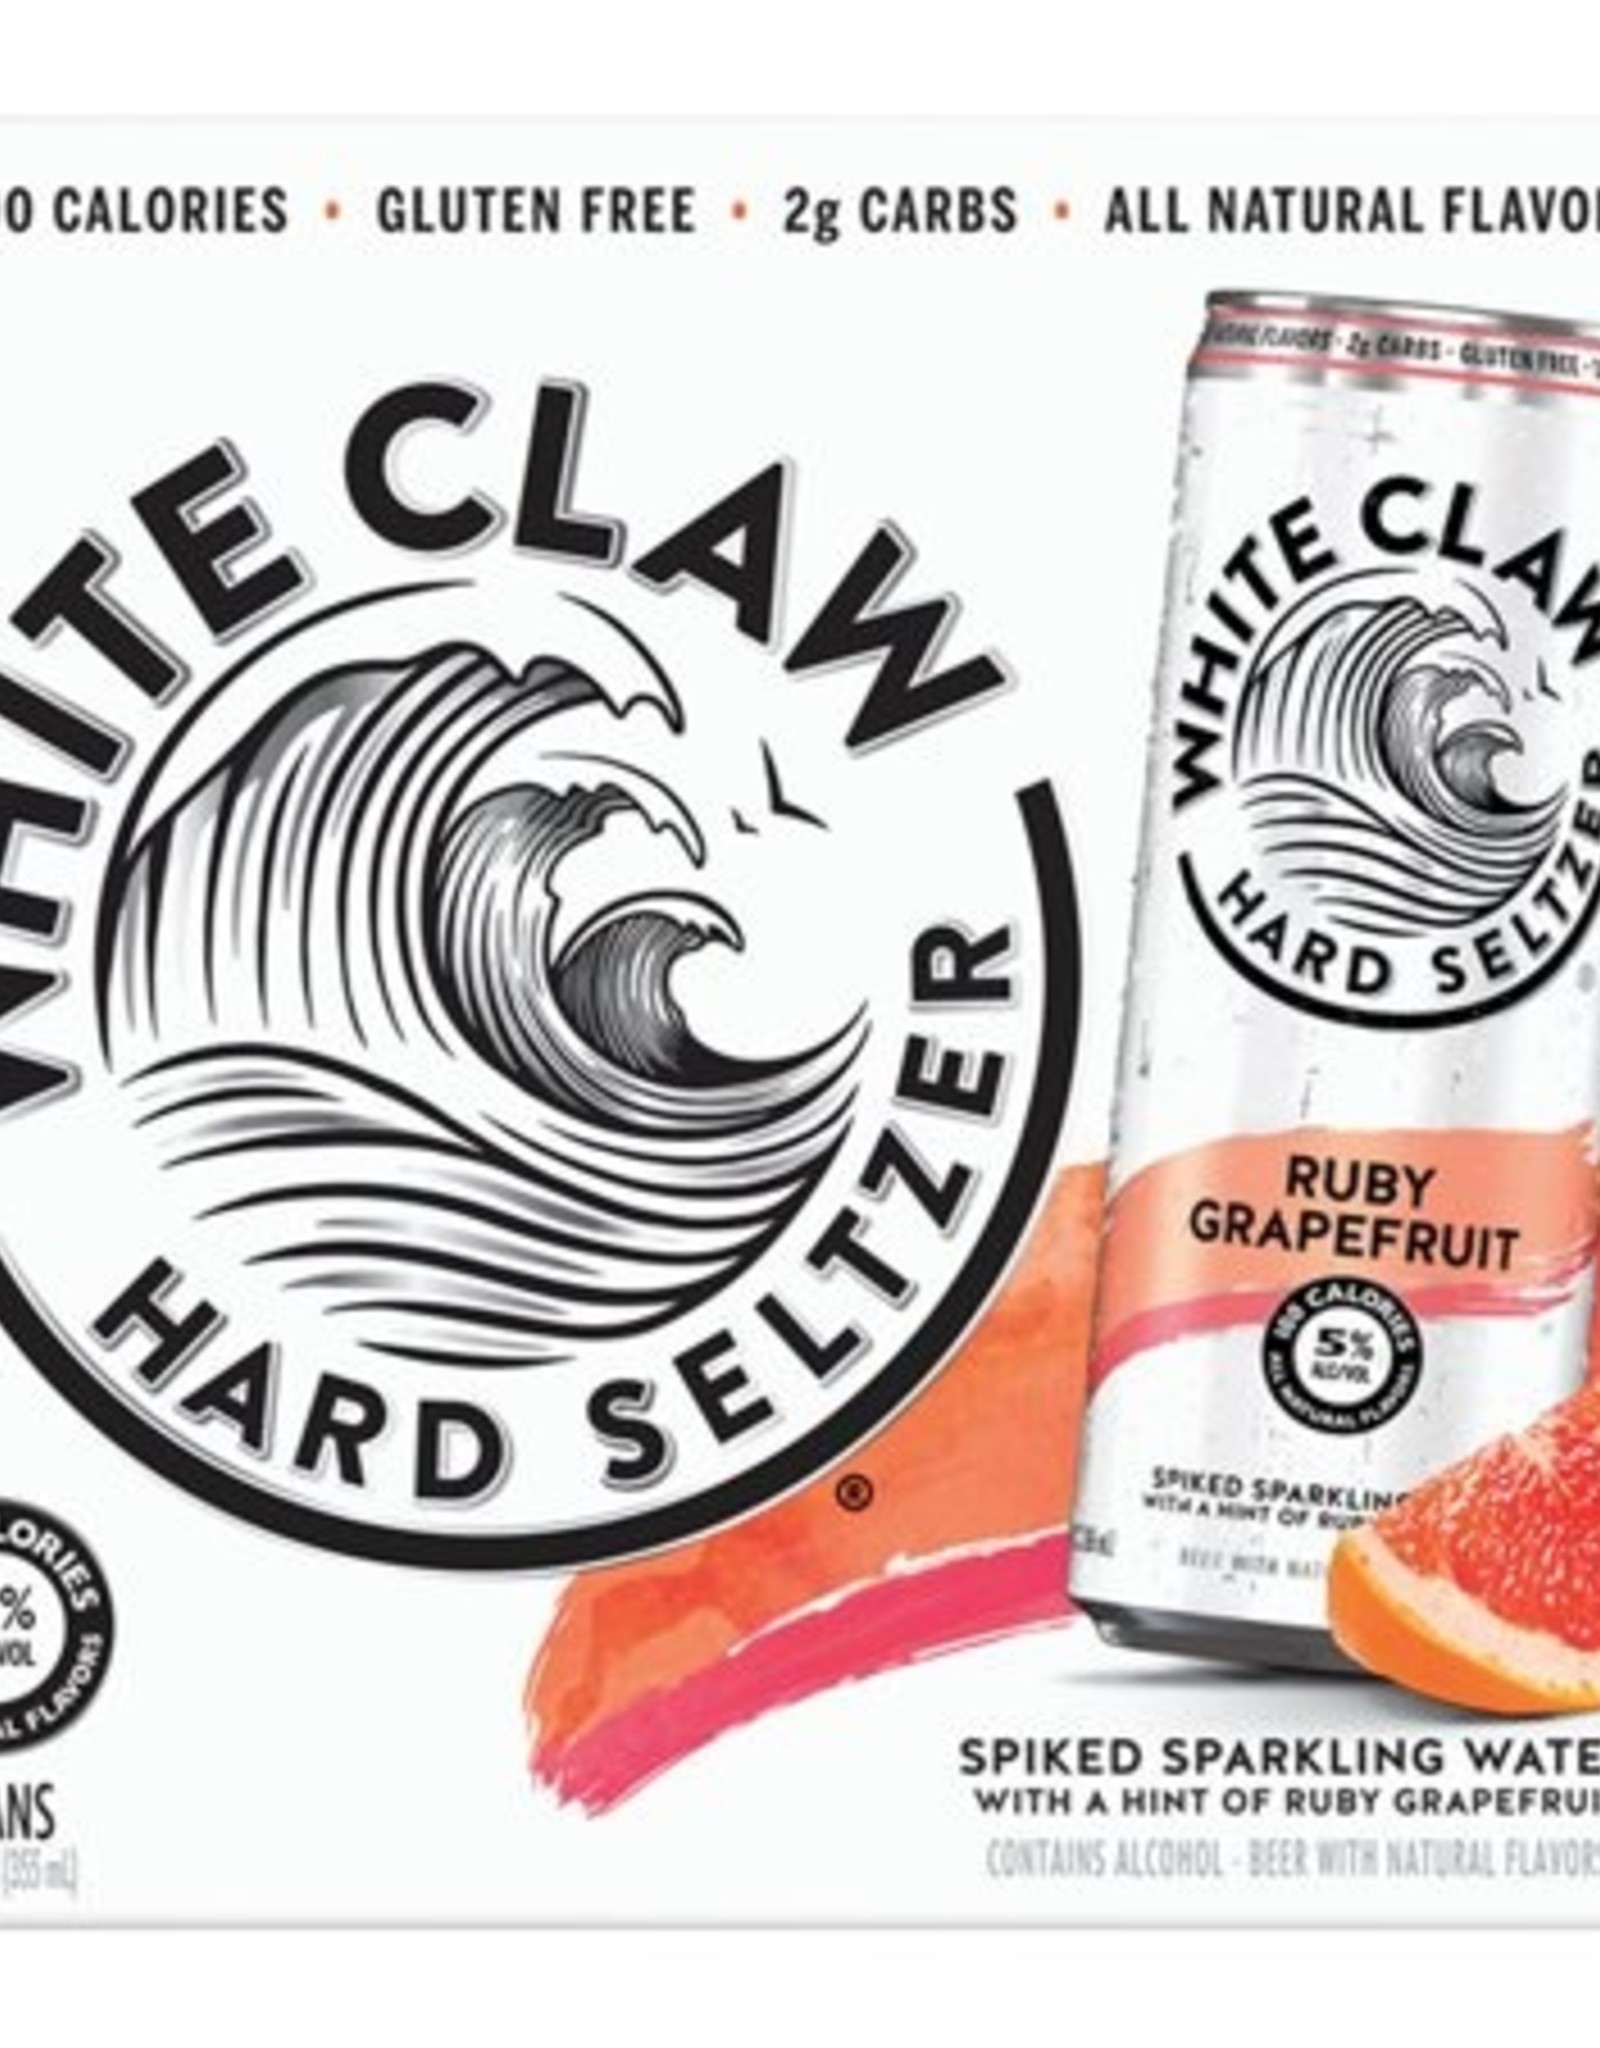 White Claw Ruby Grapefruit 6x12 oz slim cans